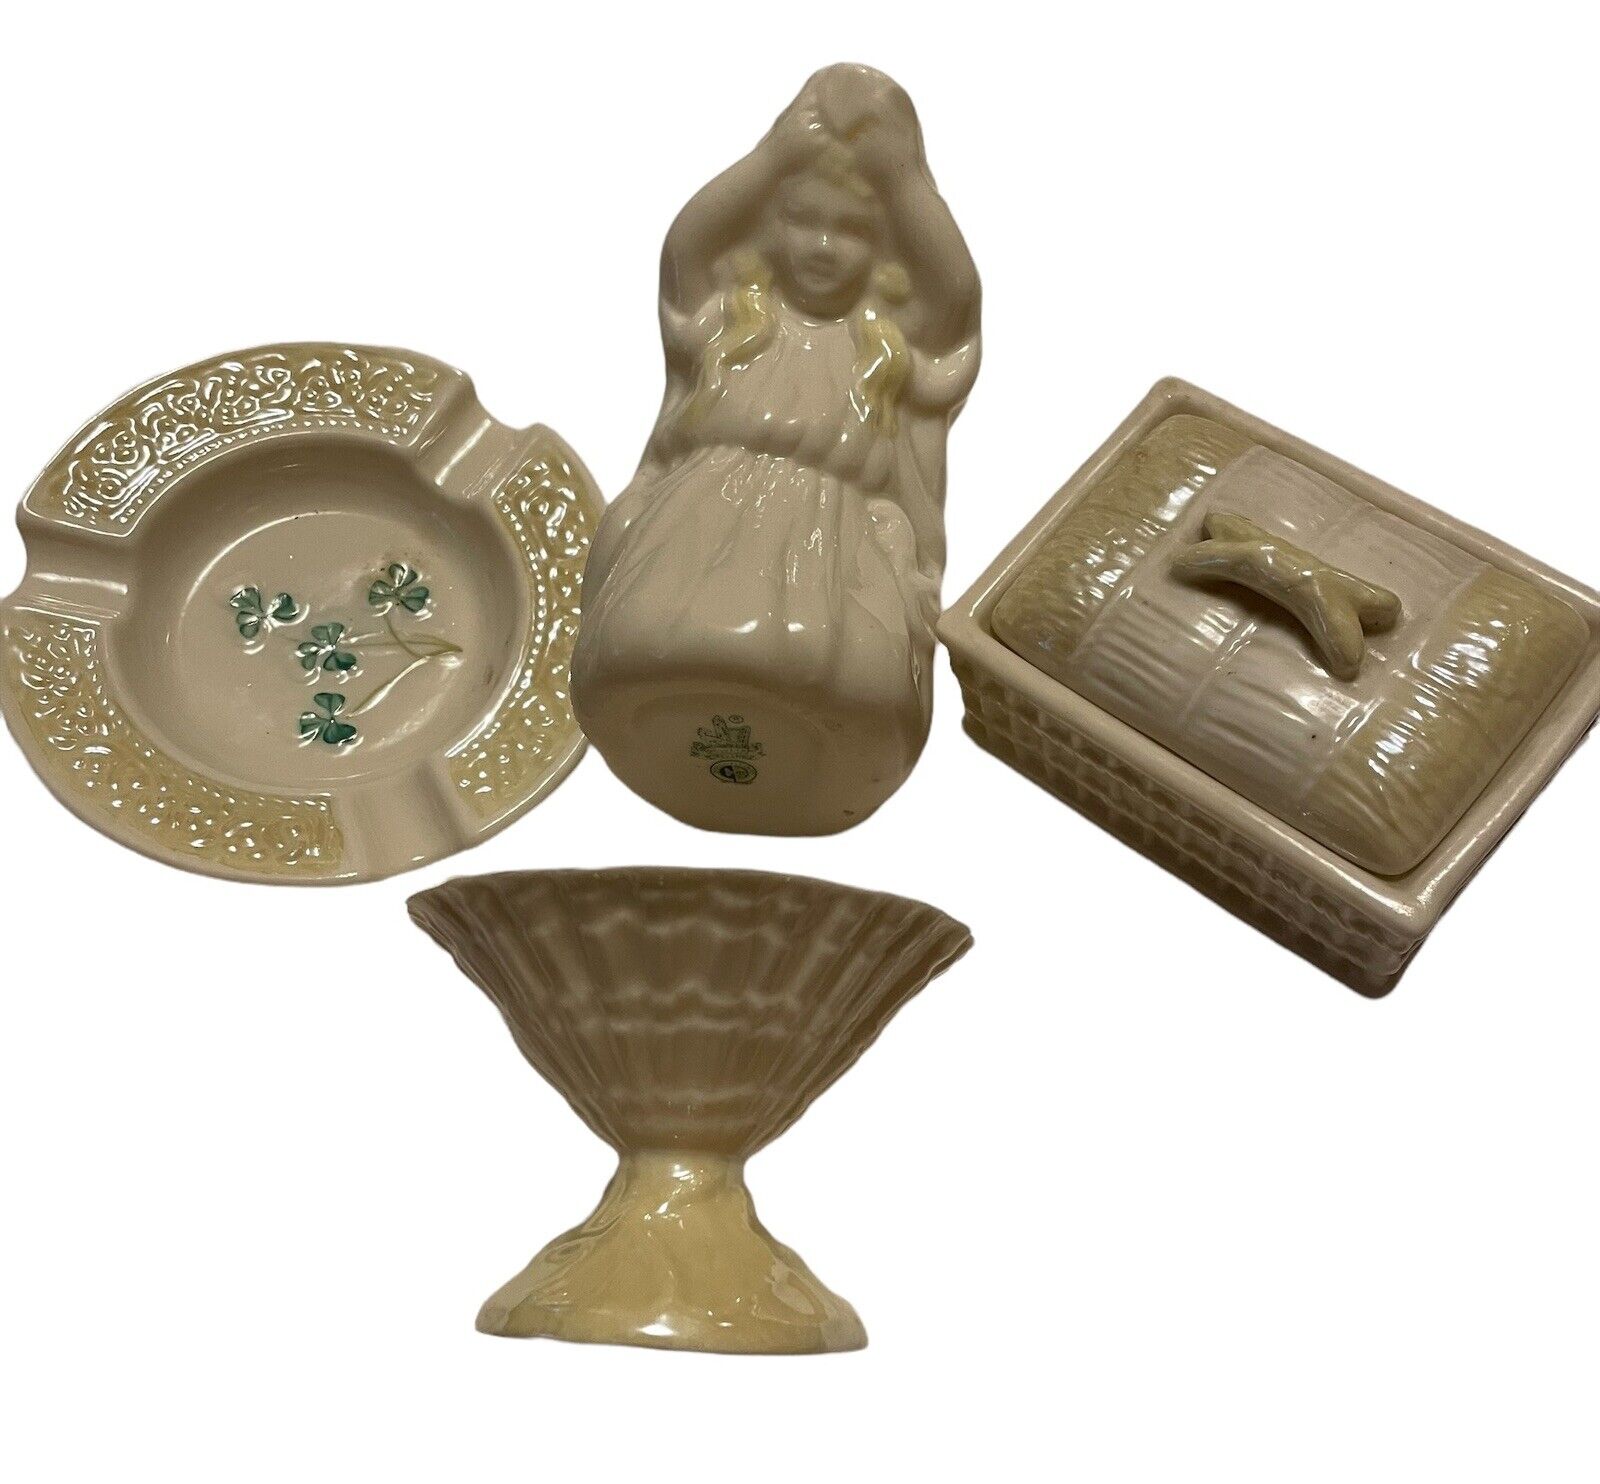 Beleek of Ireland porcelain pieces - lot of 4 Vintage Collectibles